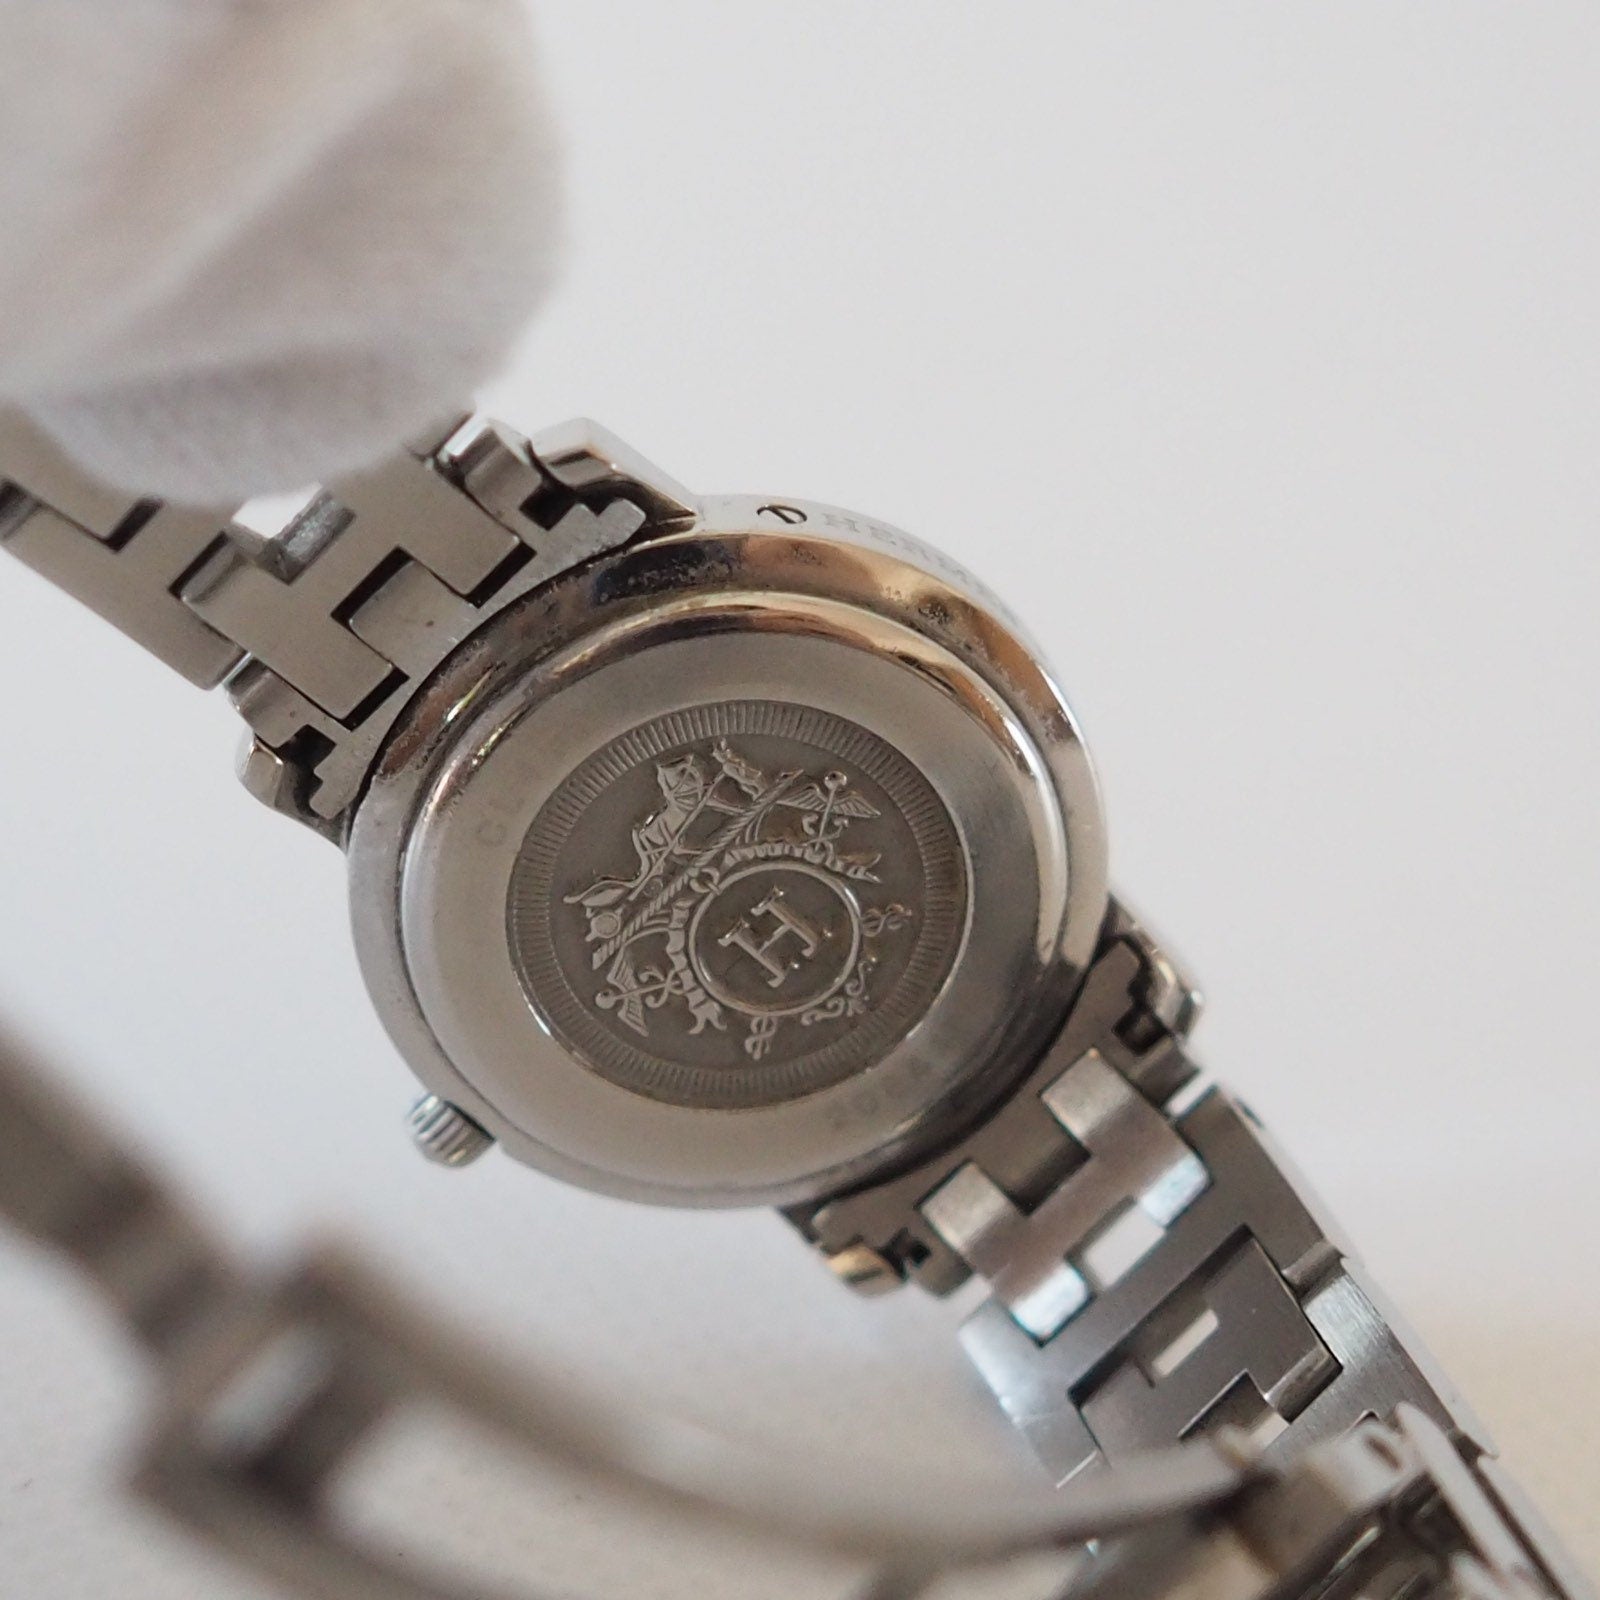 HERMES Watch Wristwatch Clipper CL4.210 Quartz White Shell Dial Ladies Steel Vintage